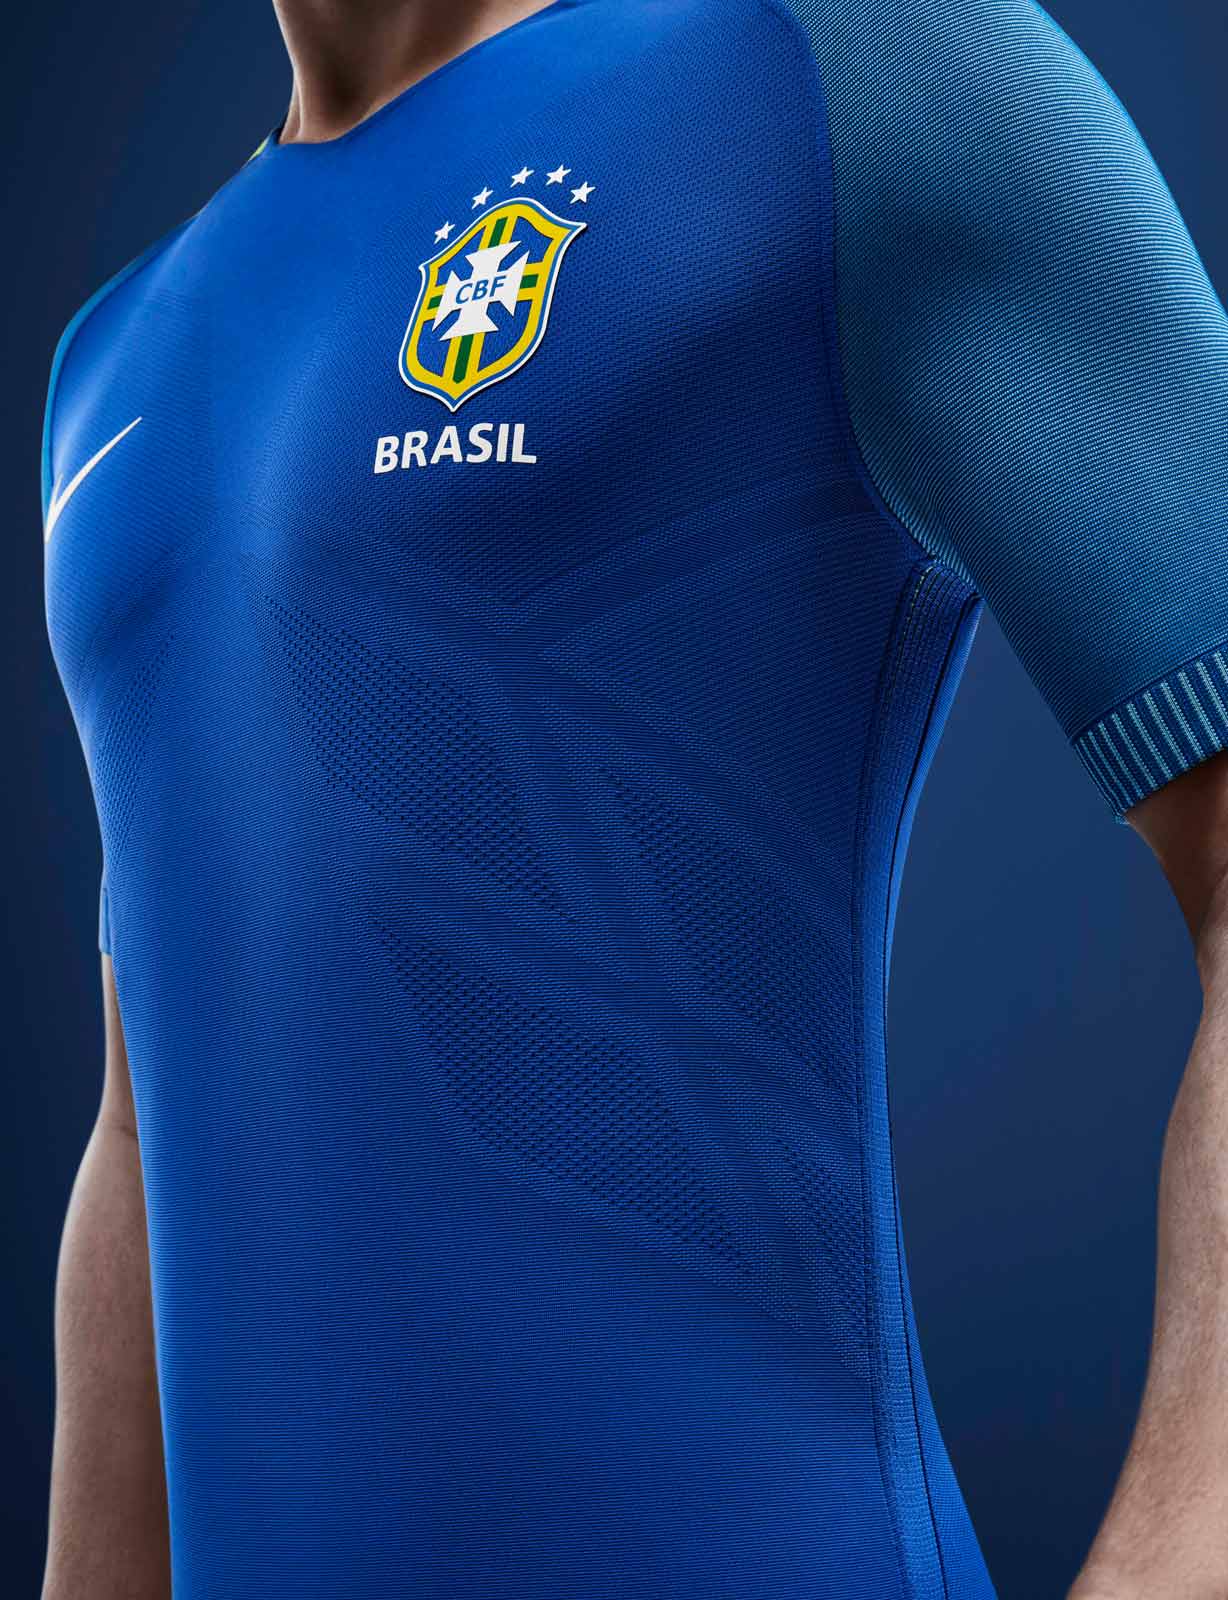 brazil-2016-copa-america-away-kit-6.jpg